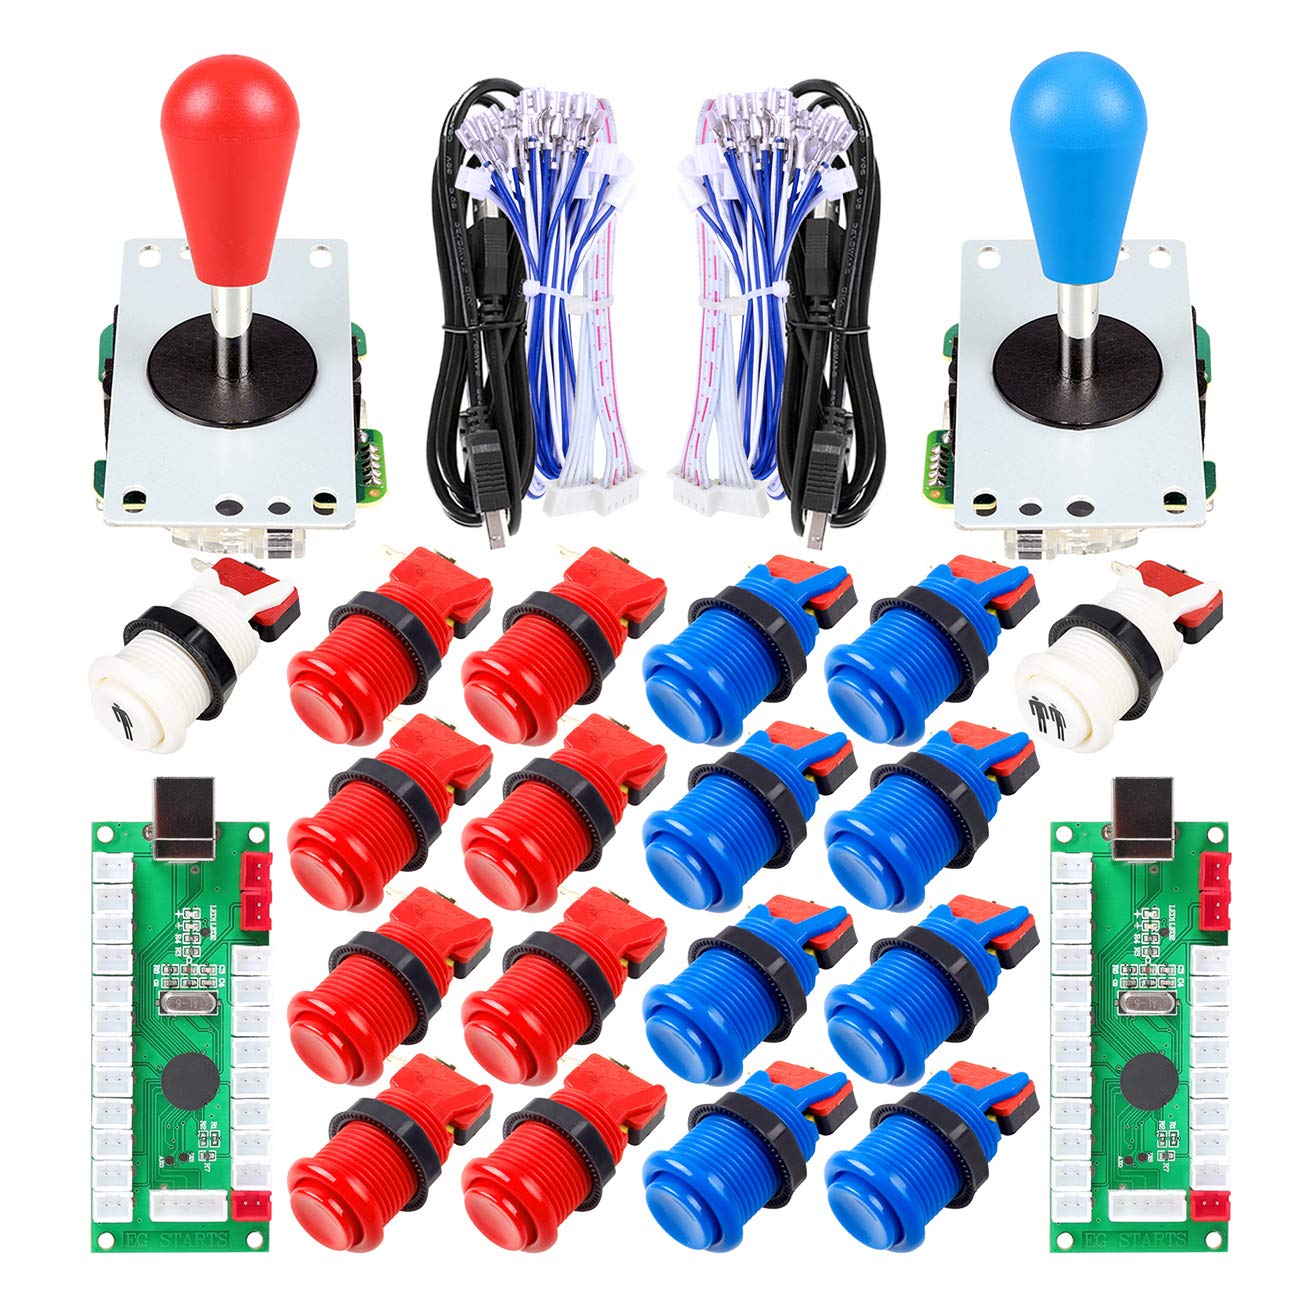 EG STARTS 2 Spieler Arcade Joystick DIY-Teile 2X USB Encoder + 2X Ellipse Oval Joystick Griff + 18x American Style Arcade Buttons für PC, MAME, Raspberry Pi, Windows-System (Rot & blau)